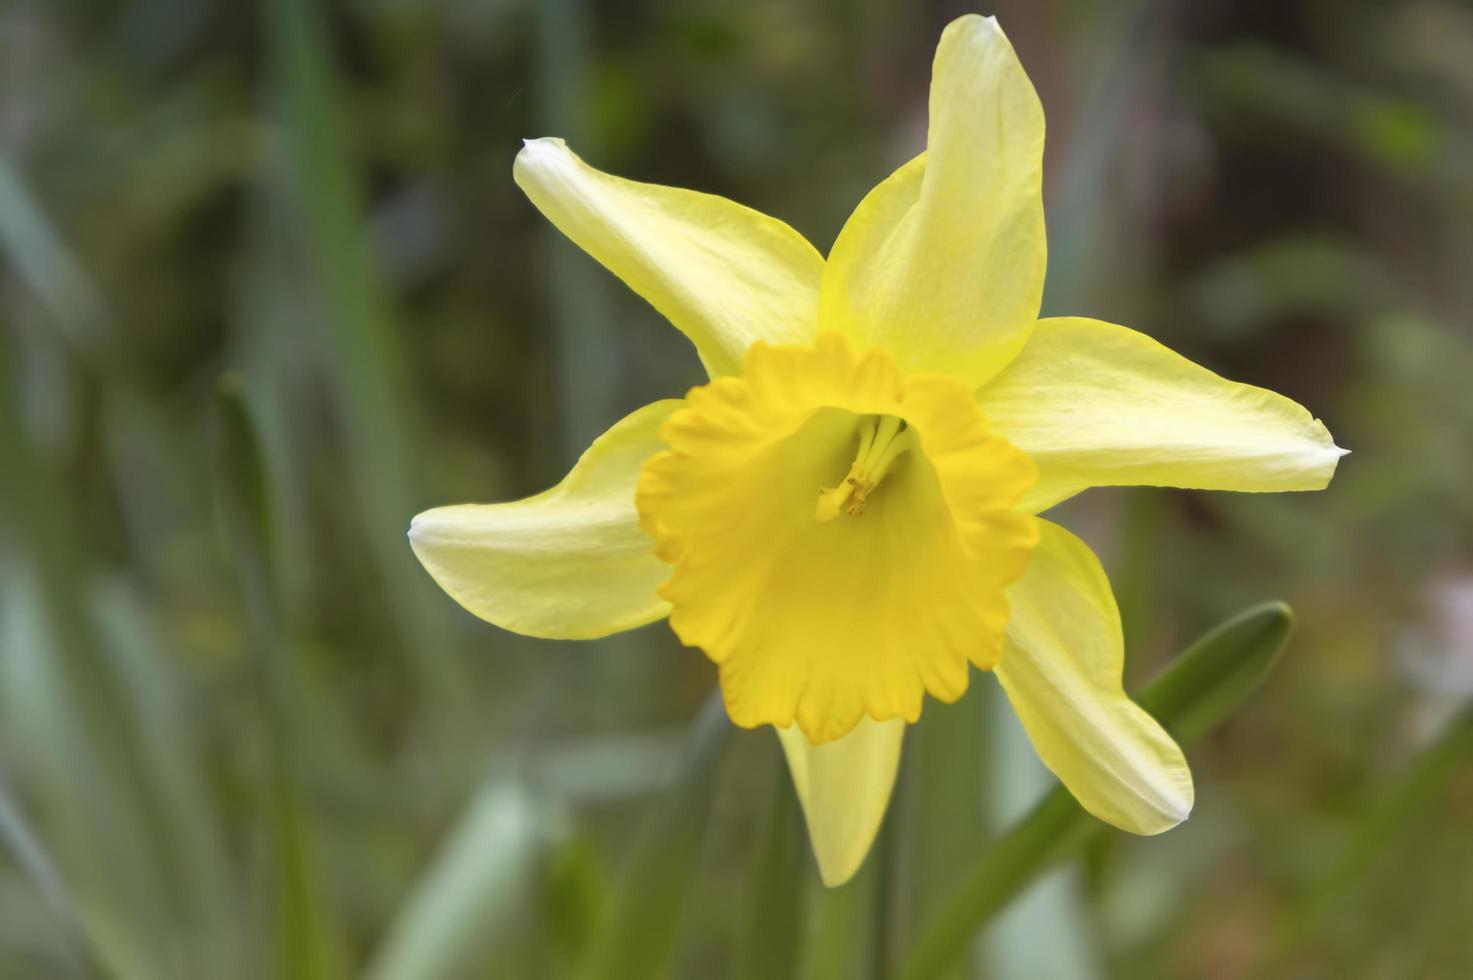 fundo natural com flor amarela de narciso foto